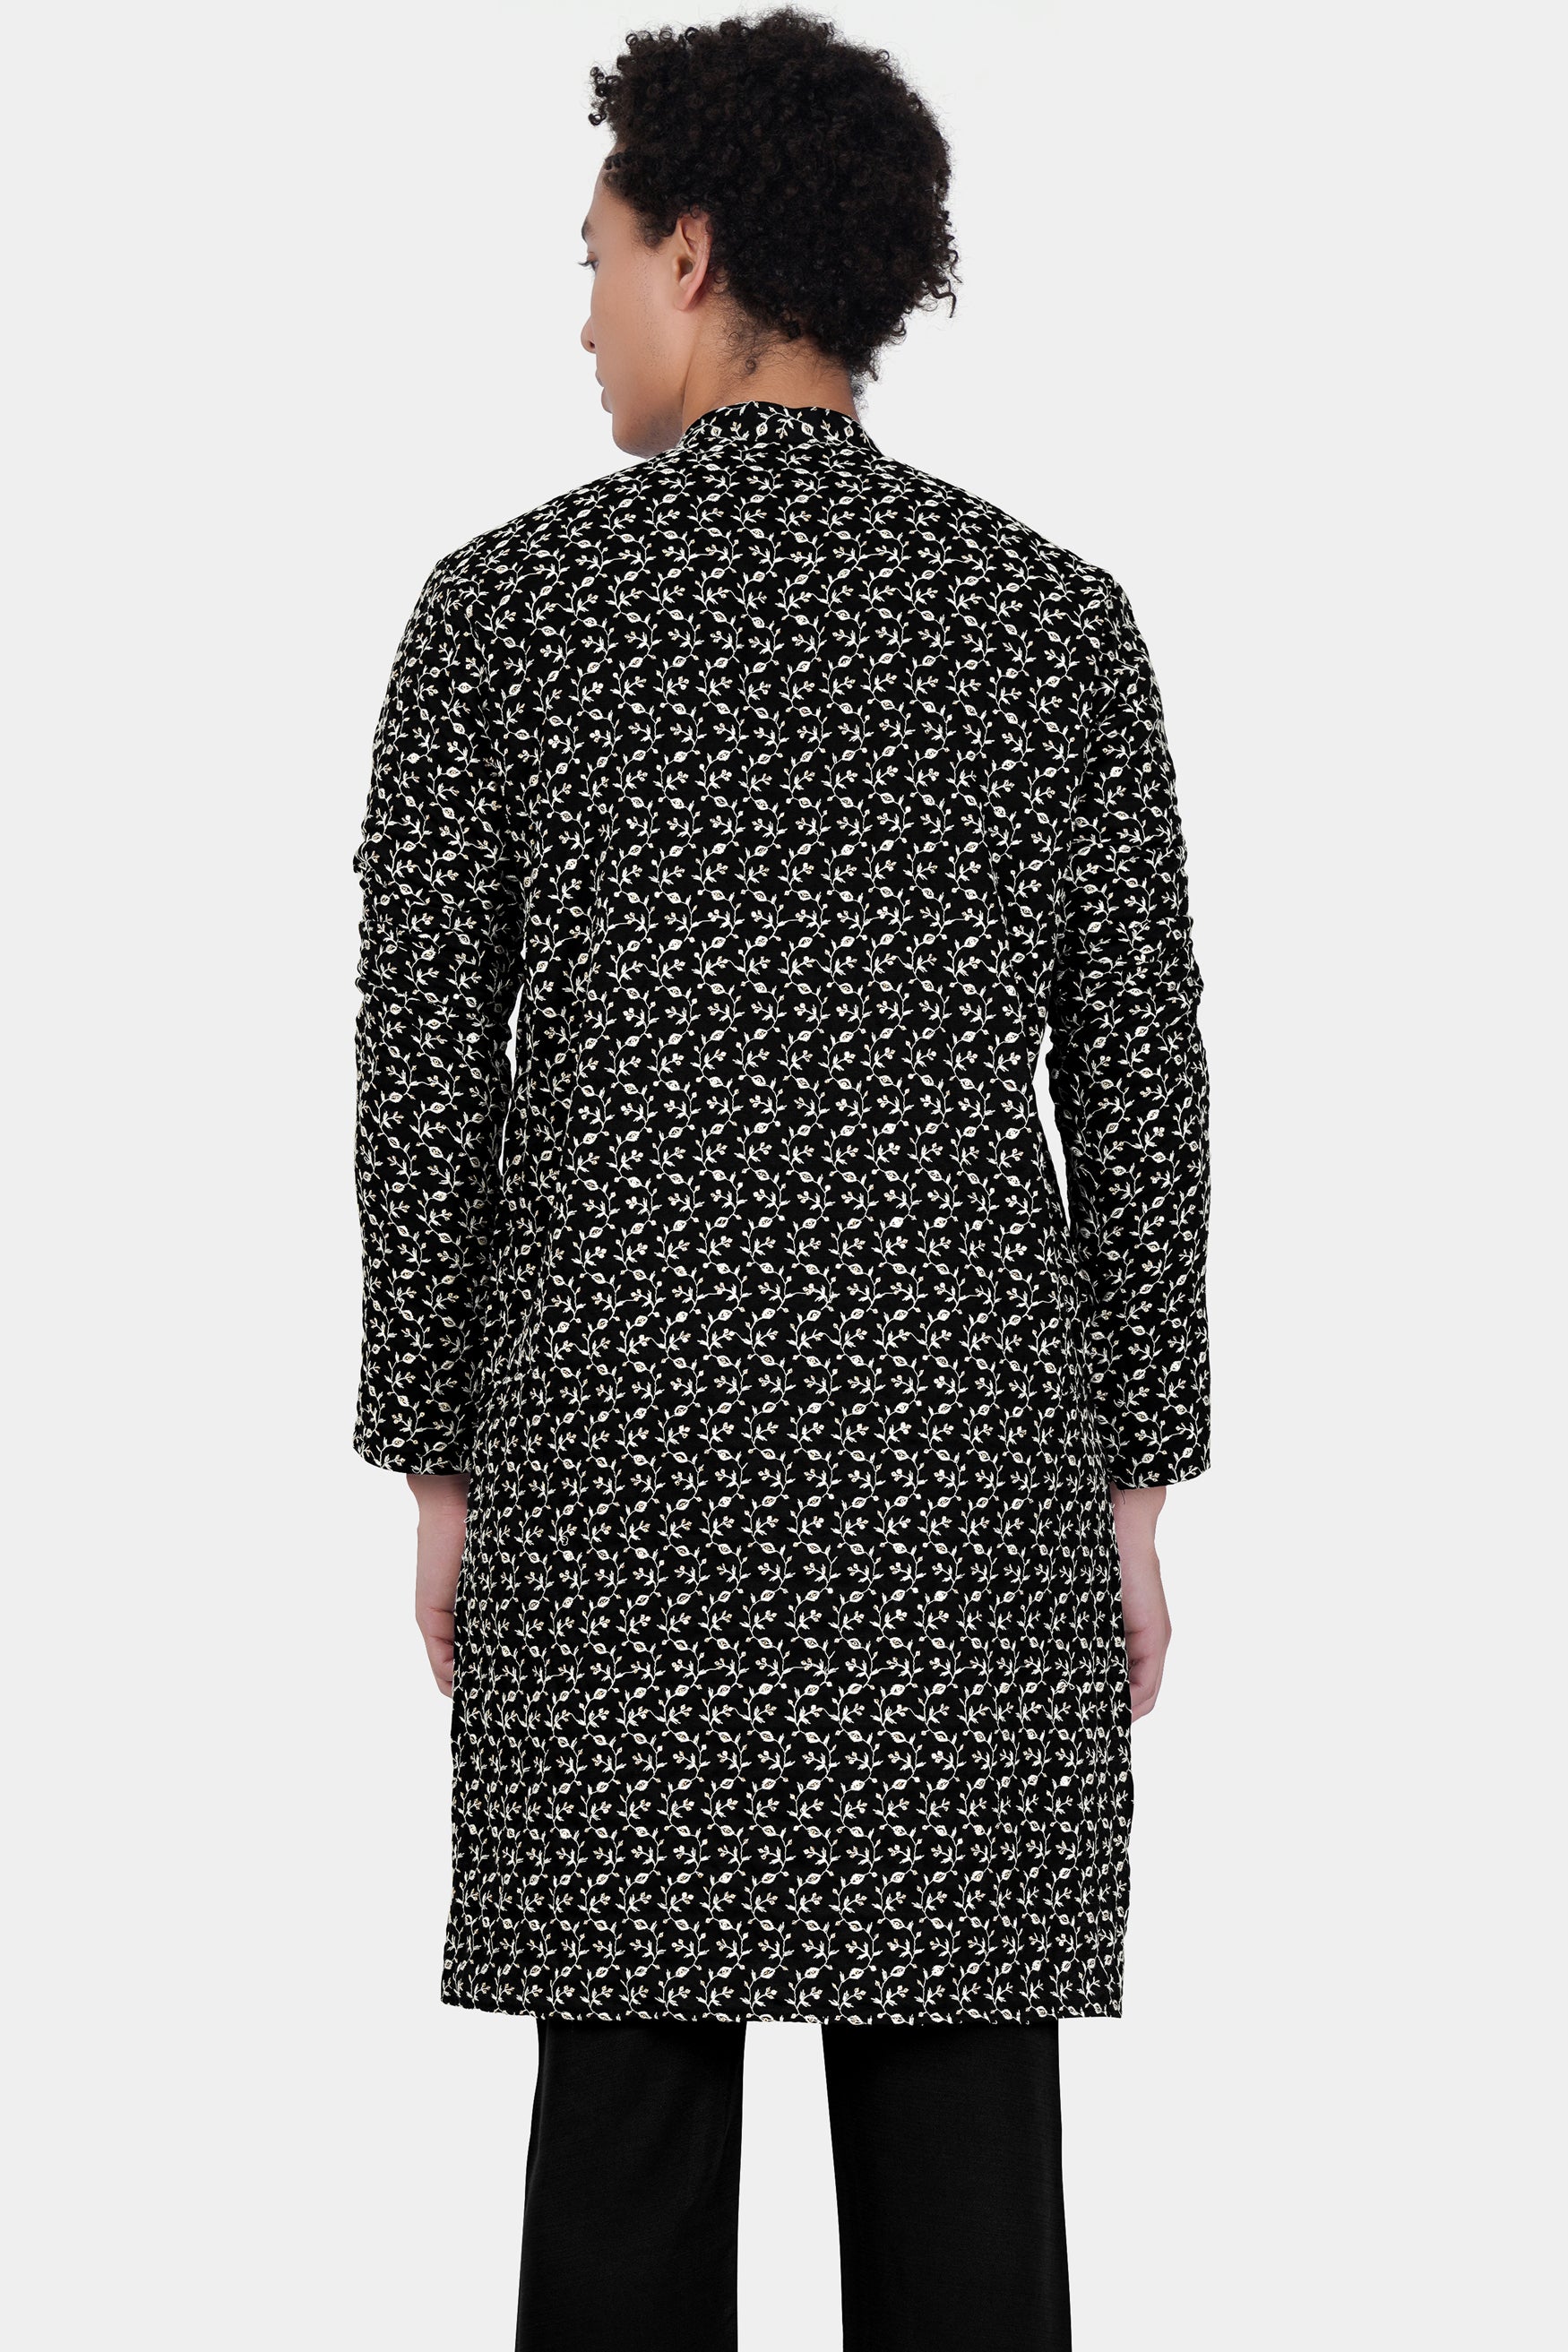 Jade Black Ditsy Pattern Thread and Sequin Embroidered Subtle Sheen Viscose Designer Kurta